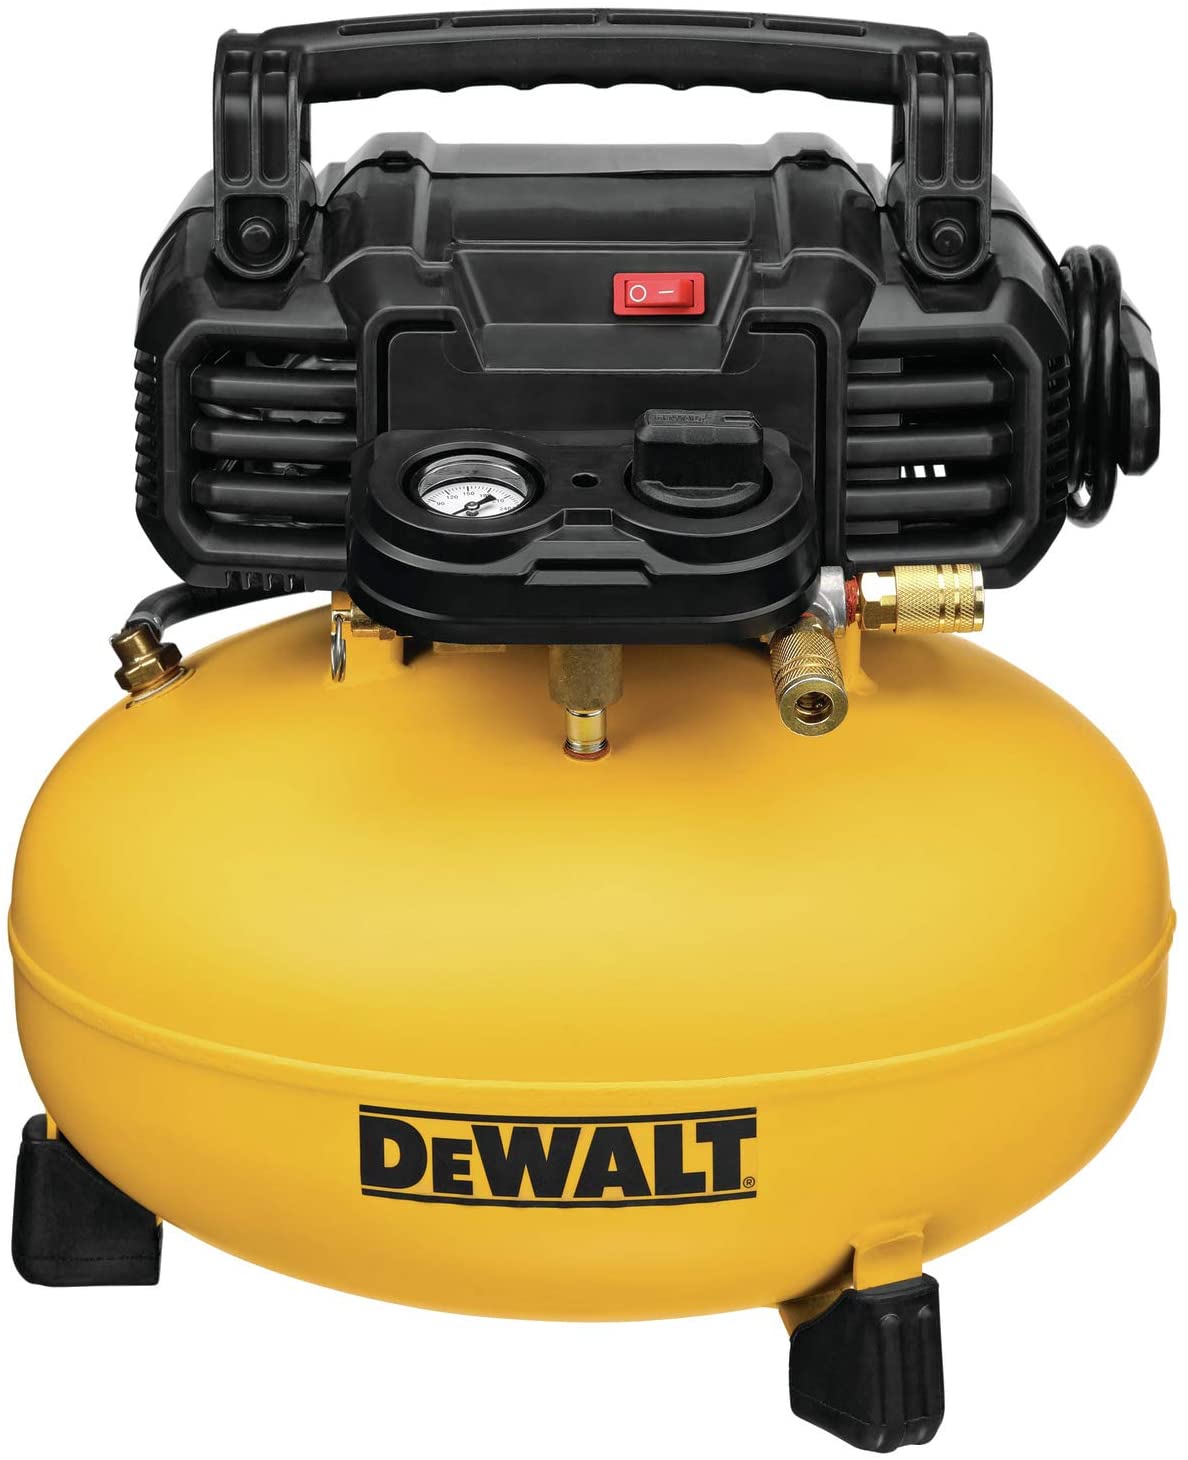 Dewalt Pancake 165 PSI Air Compressor For Home; Review